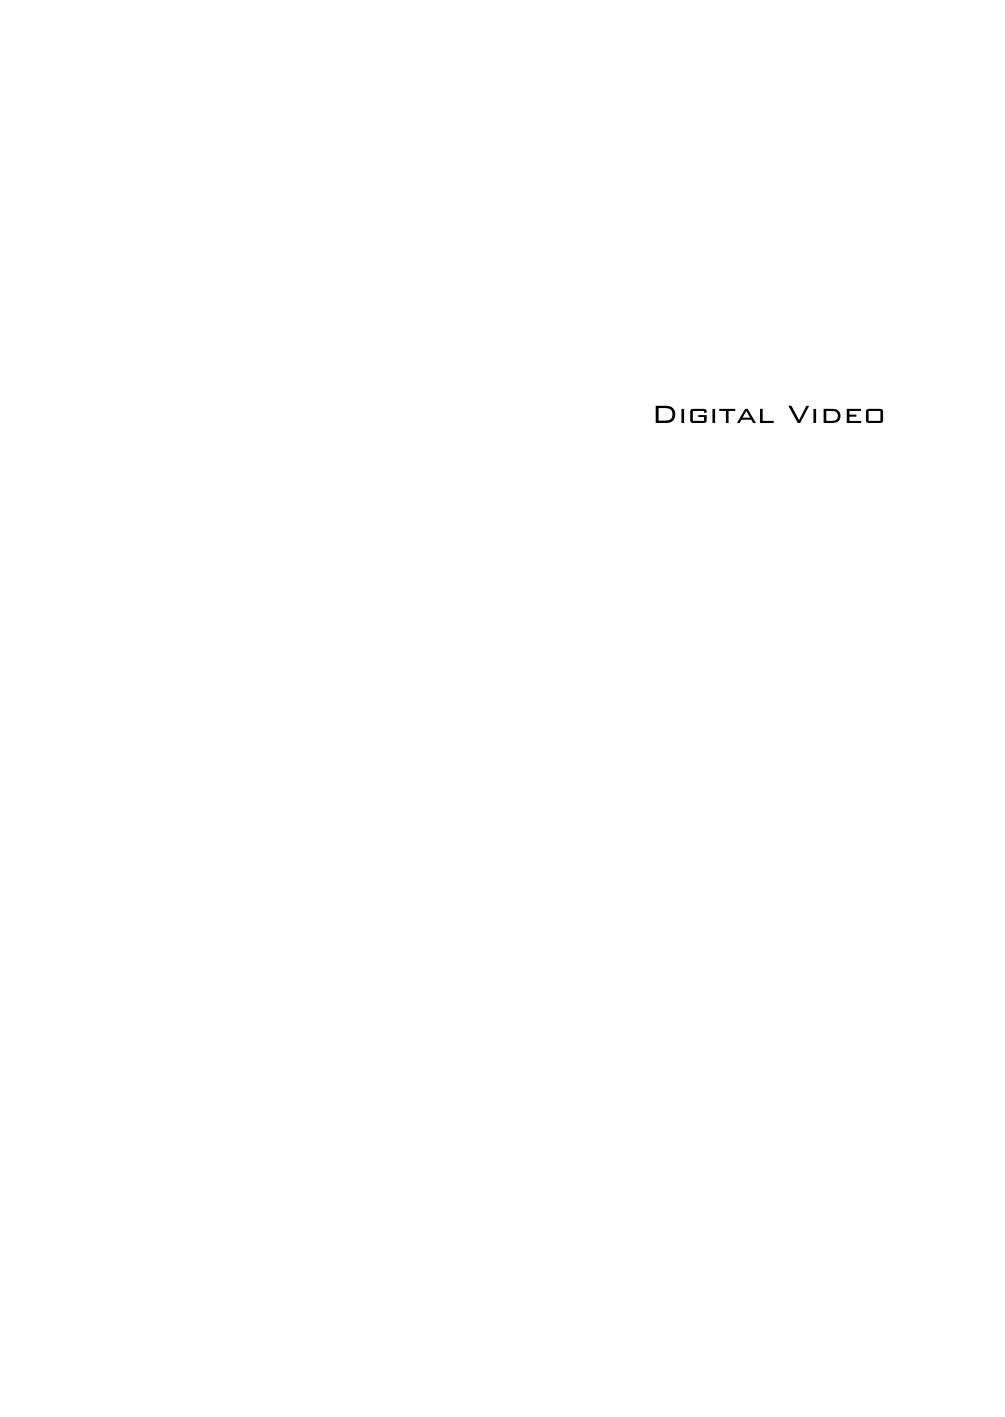 Microsoft Word - Preface&Contents_Digital_Video.doc